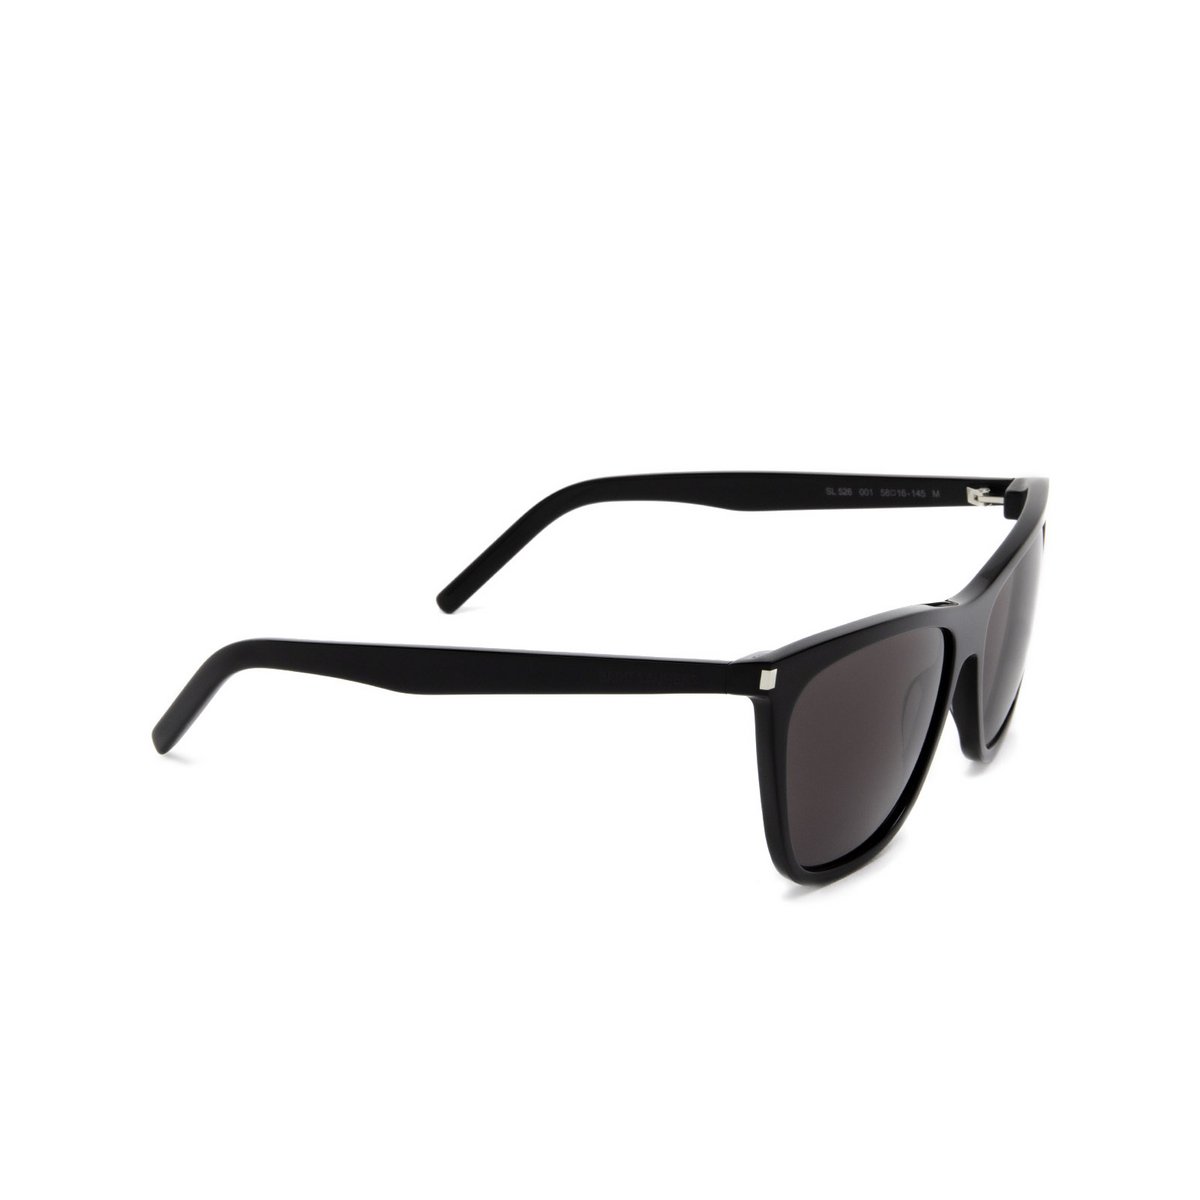 Saint Laurent® Cat-eye Sunglasses: SL 526 color Black 001 - three-quarters view.